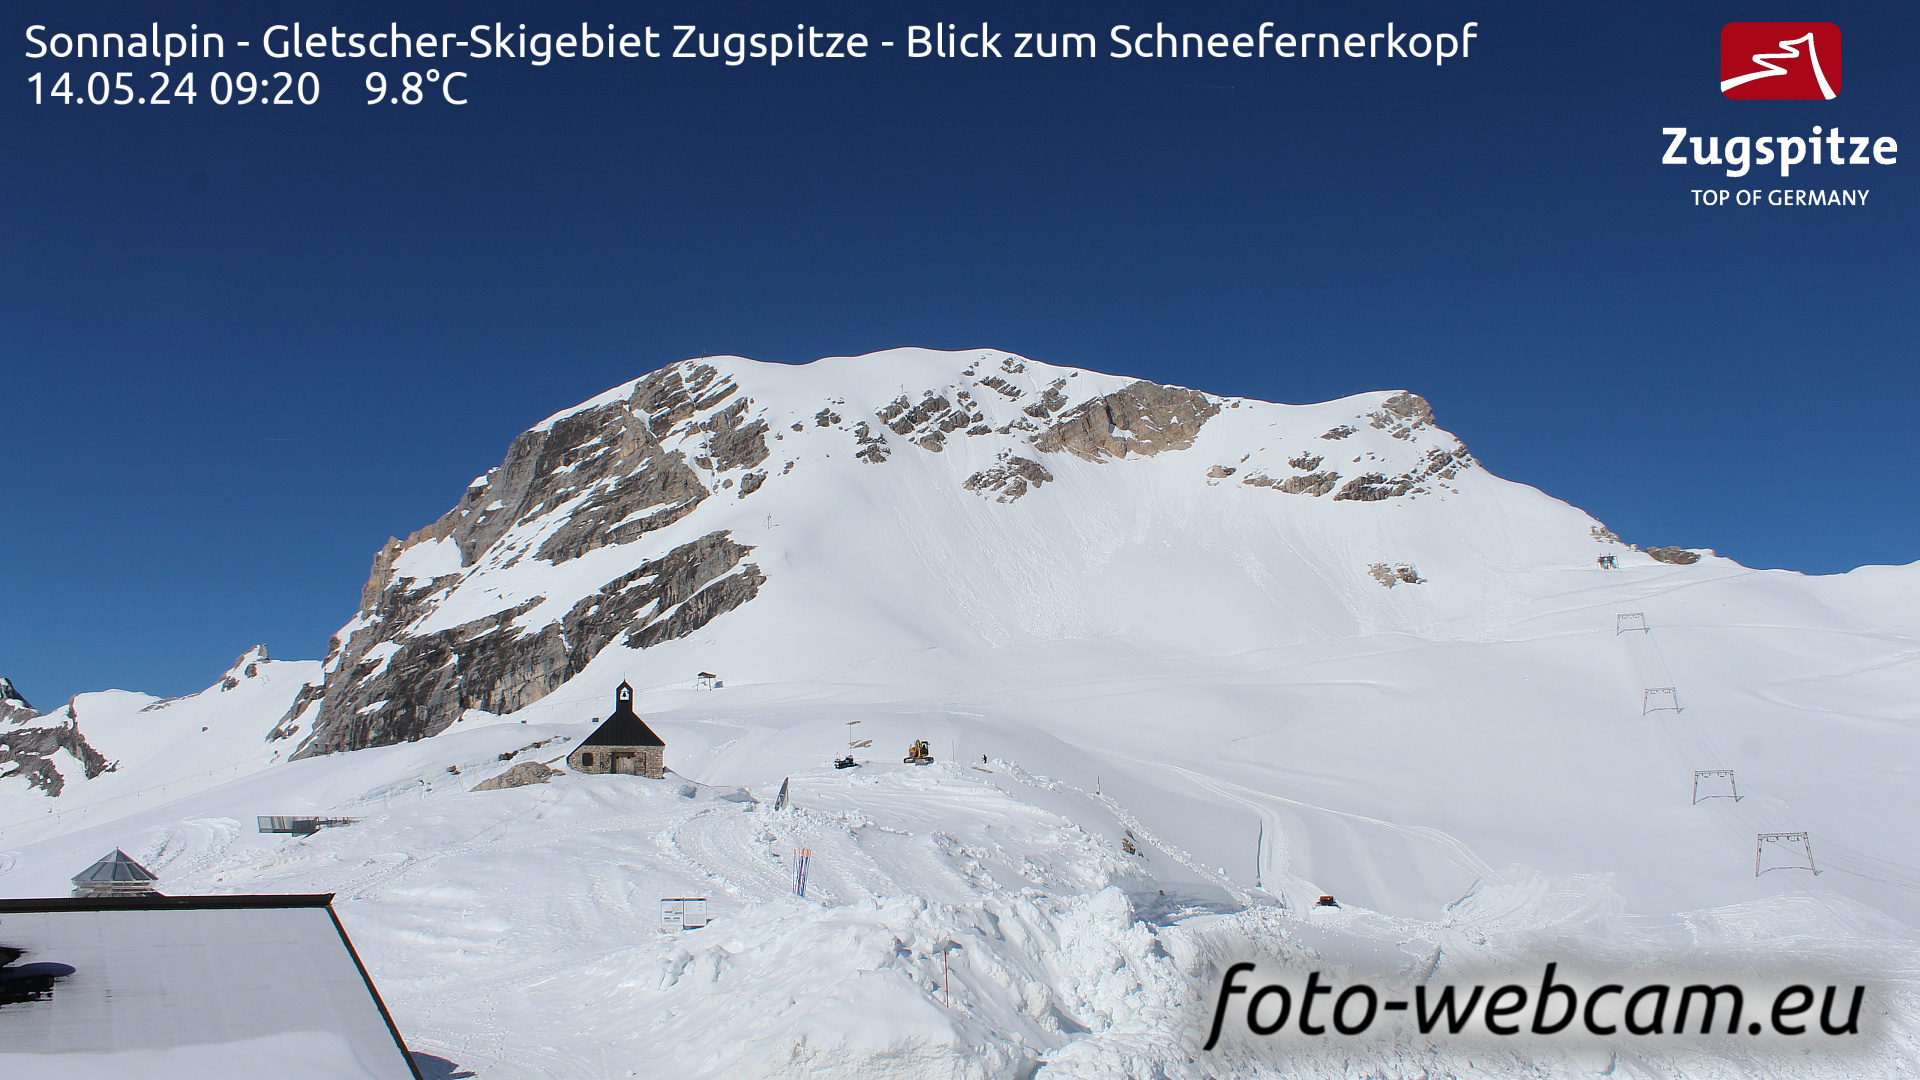 Zugspitze Gio. 09:24